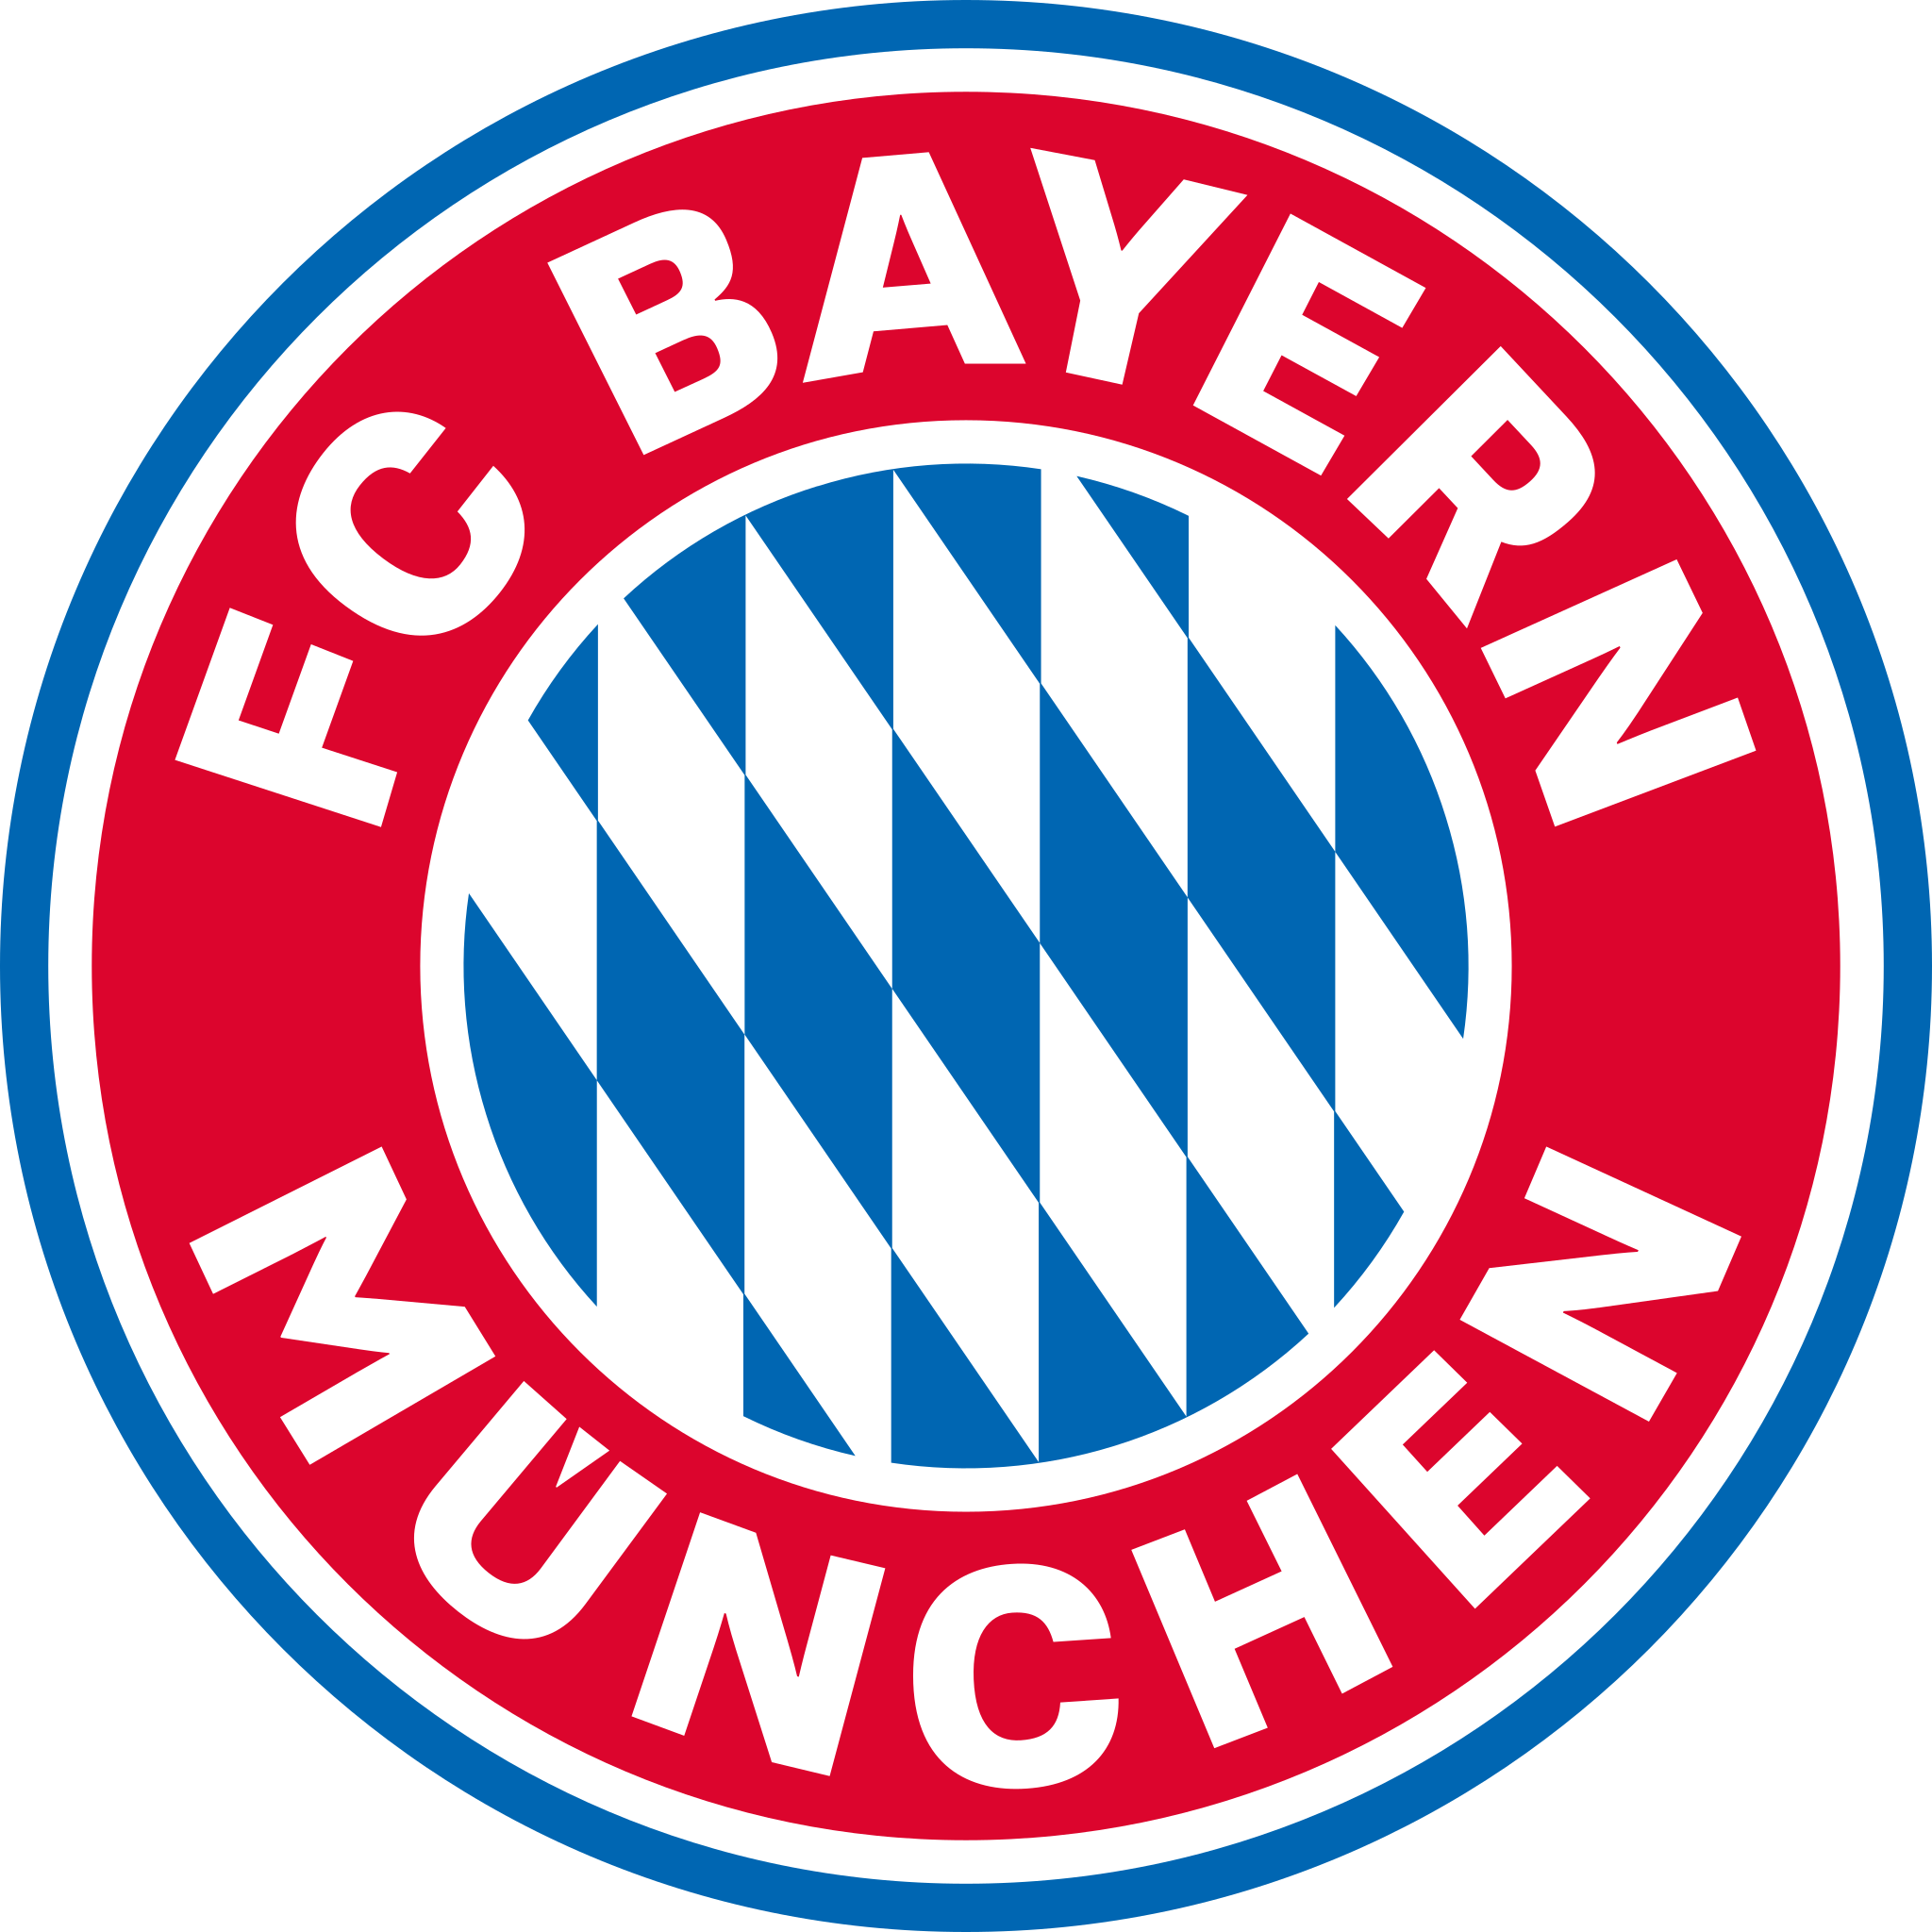 File:FC Bayern München logo (2017).svg - Wikipedia